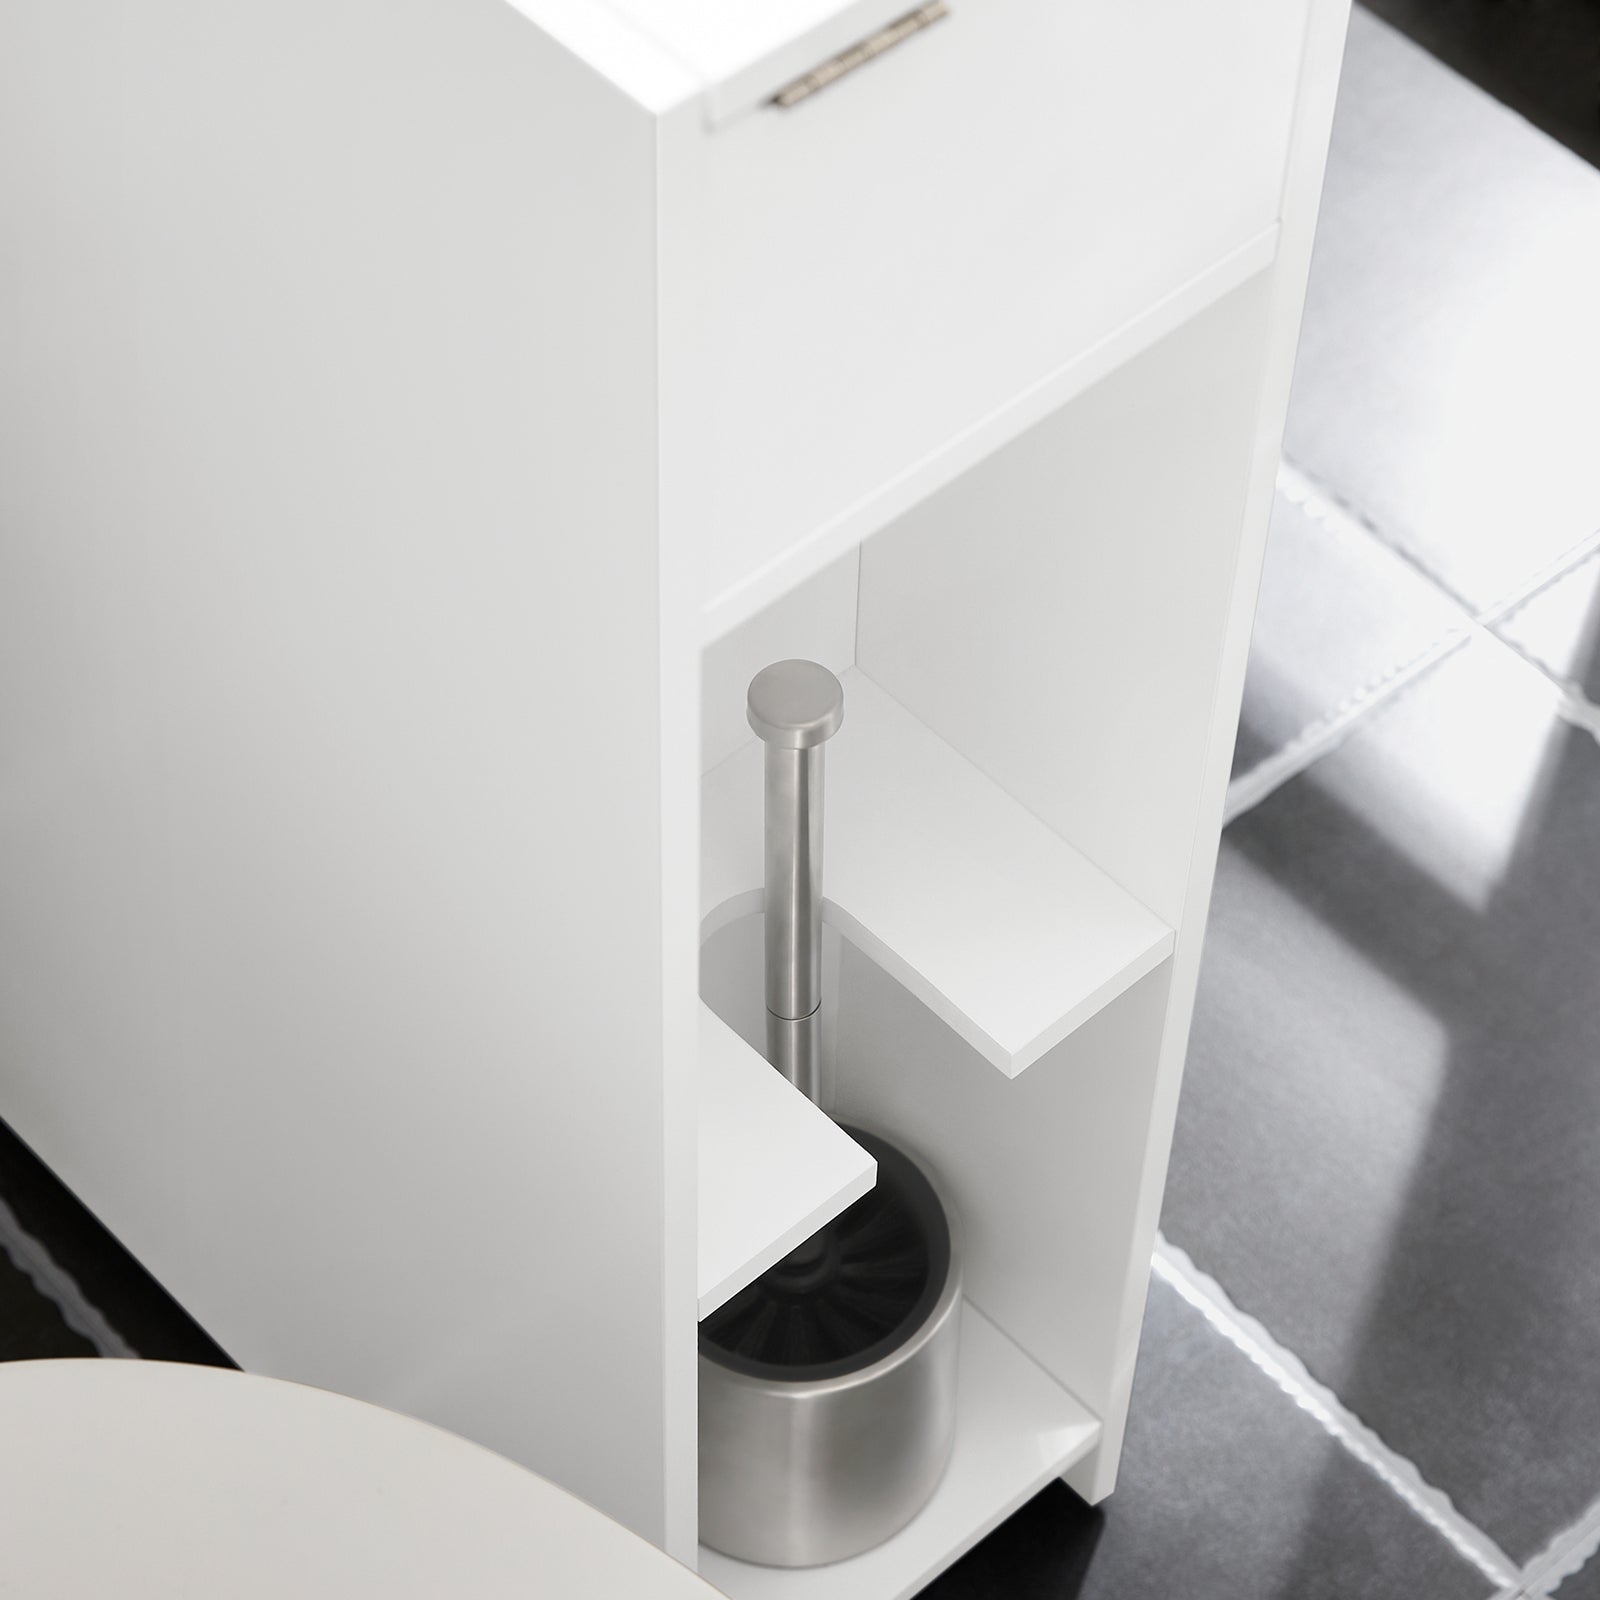 SoBuy BZR111-W, Narrow Bathroom Cabinet Storage Cabinet Toilet Paper Roll Holder